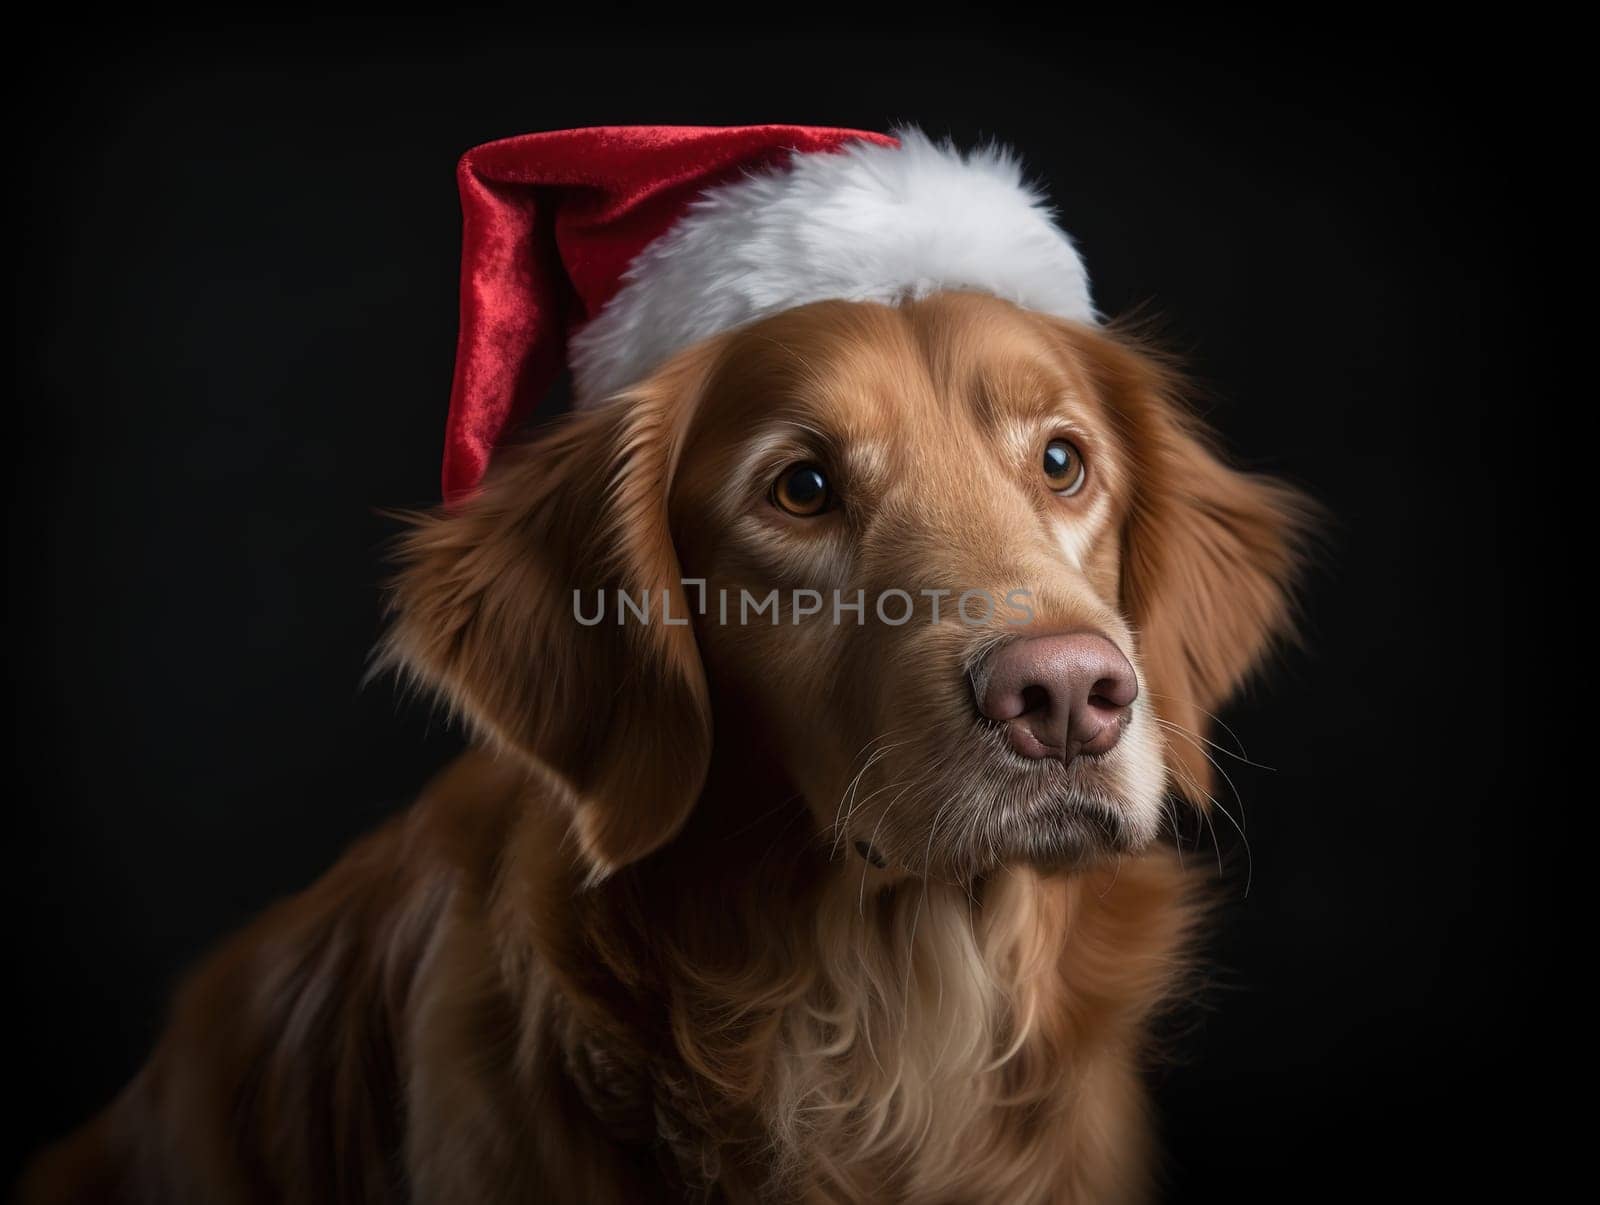 Christmas Portrait Of A Golden Retriever Dog In A Santa Hat Captures The Festive Spirit